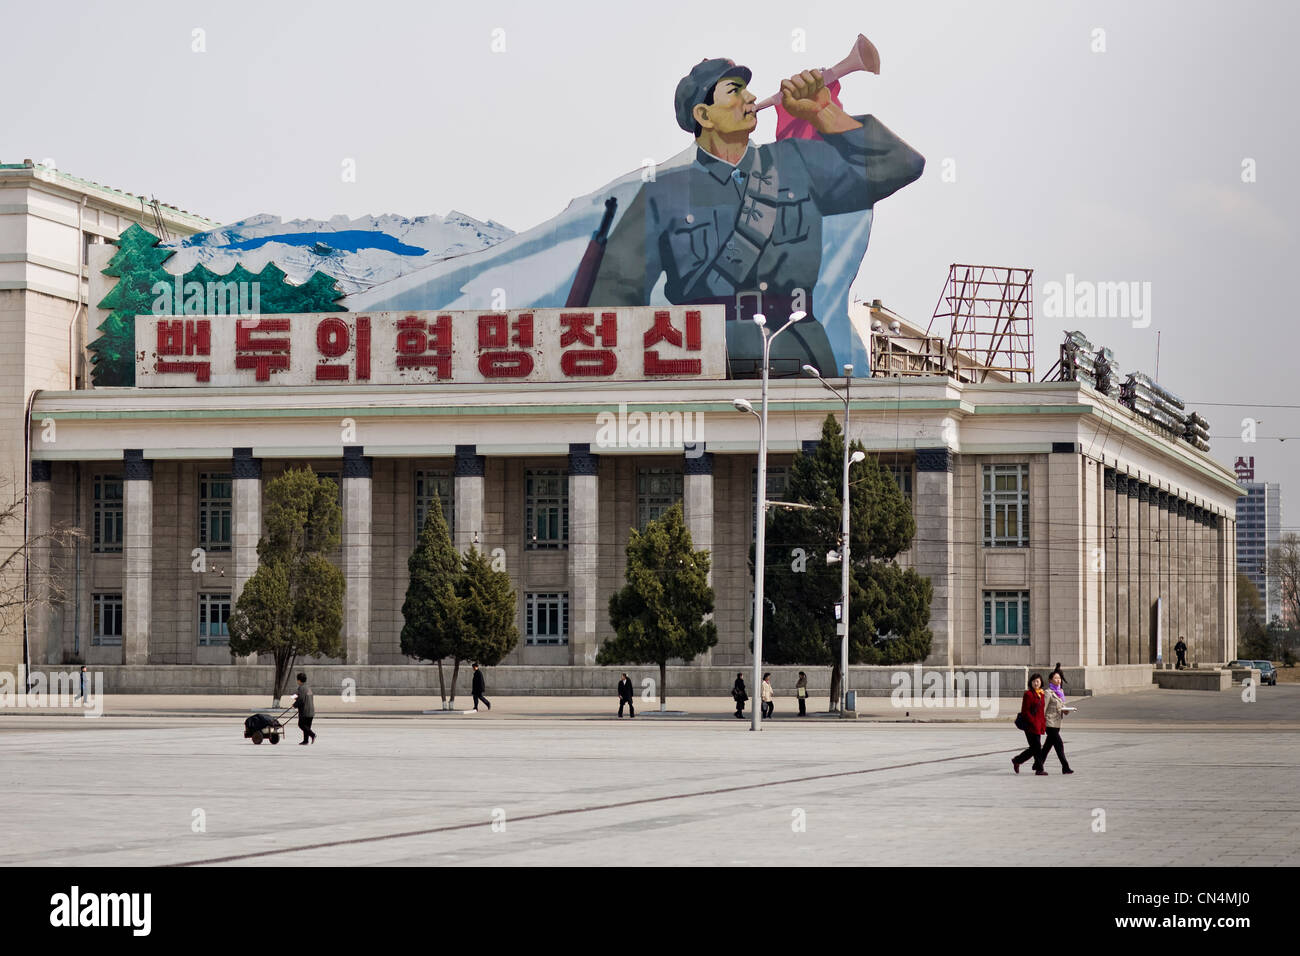 North Korea, Pyongyang, Kim Il-Sung square, frescoe and slogans Stock Photo